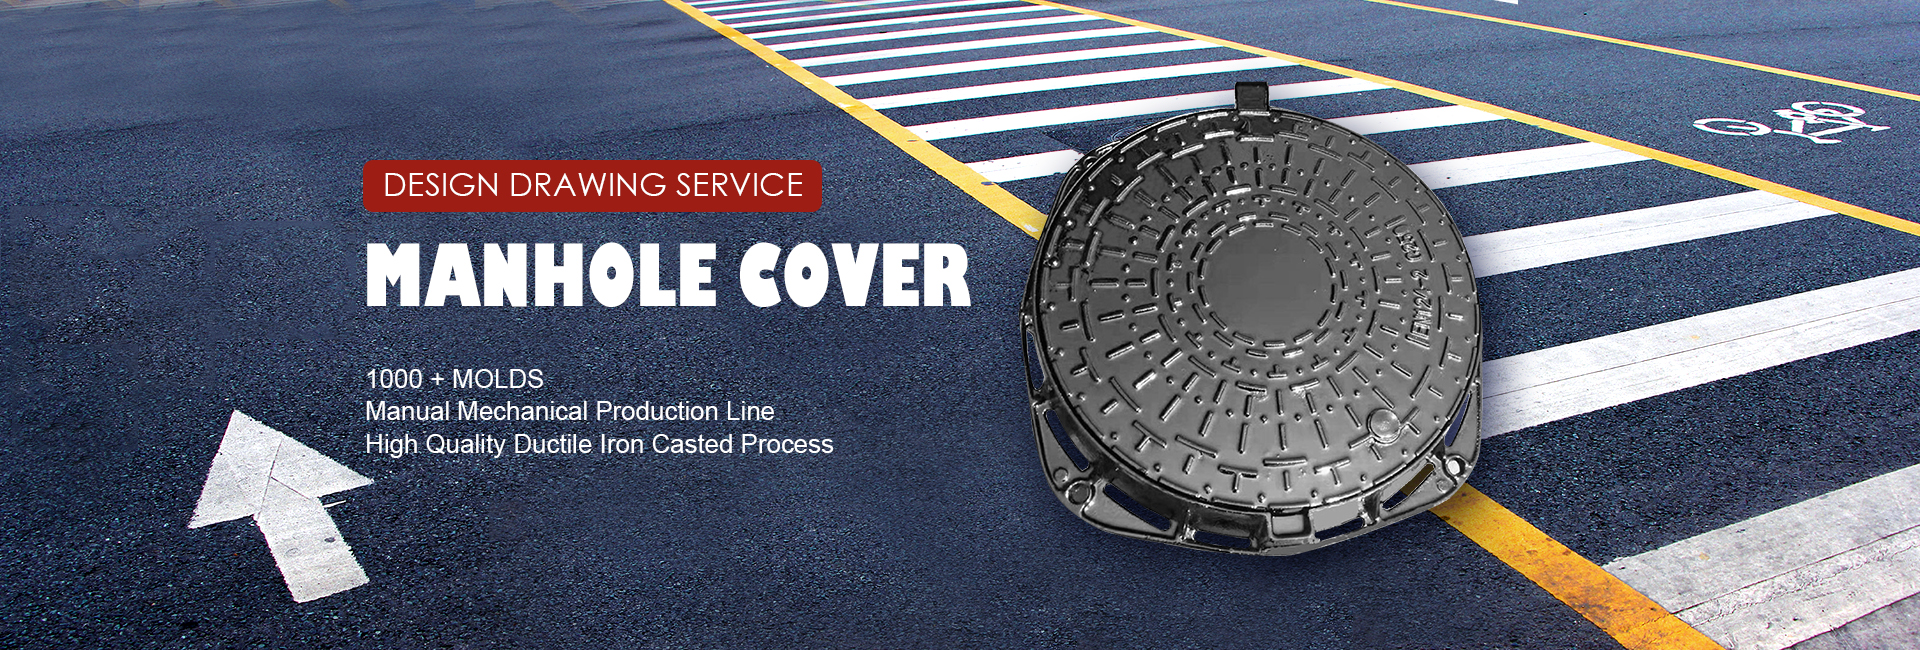 Round manhole cover